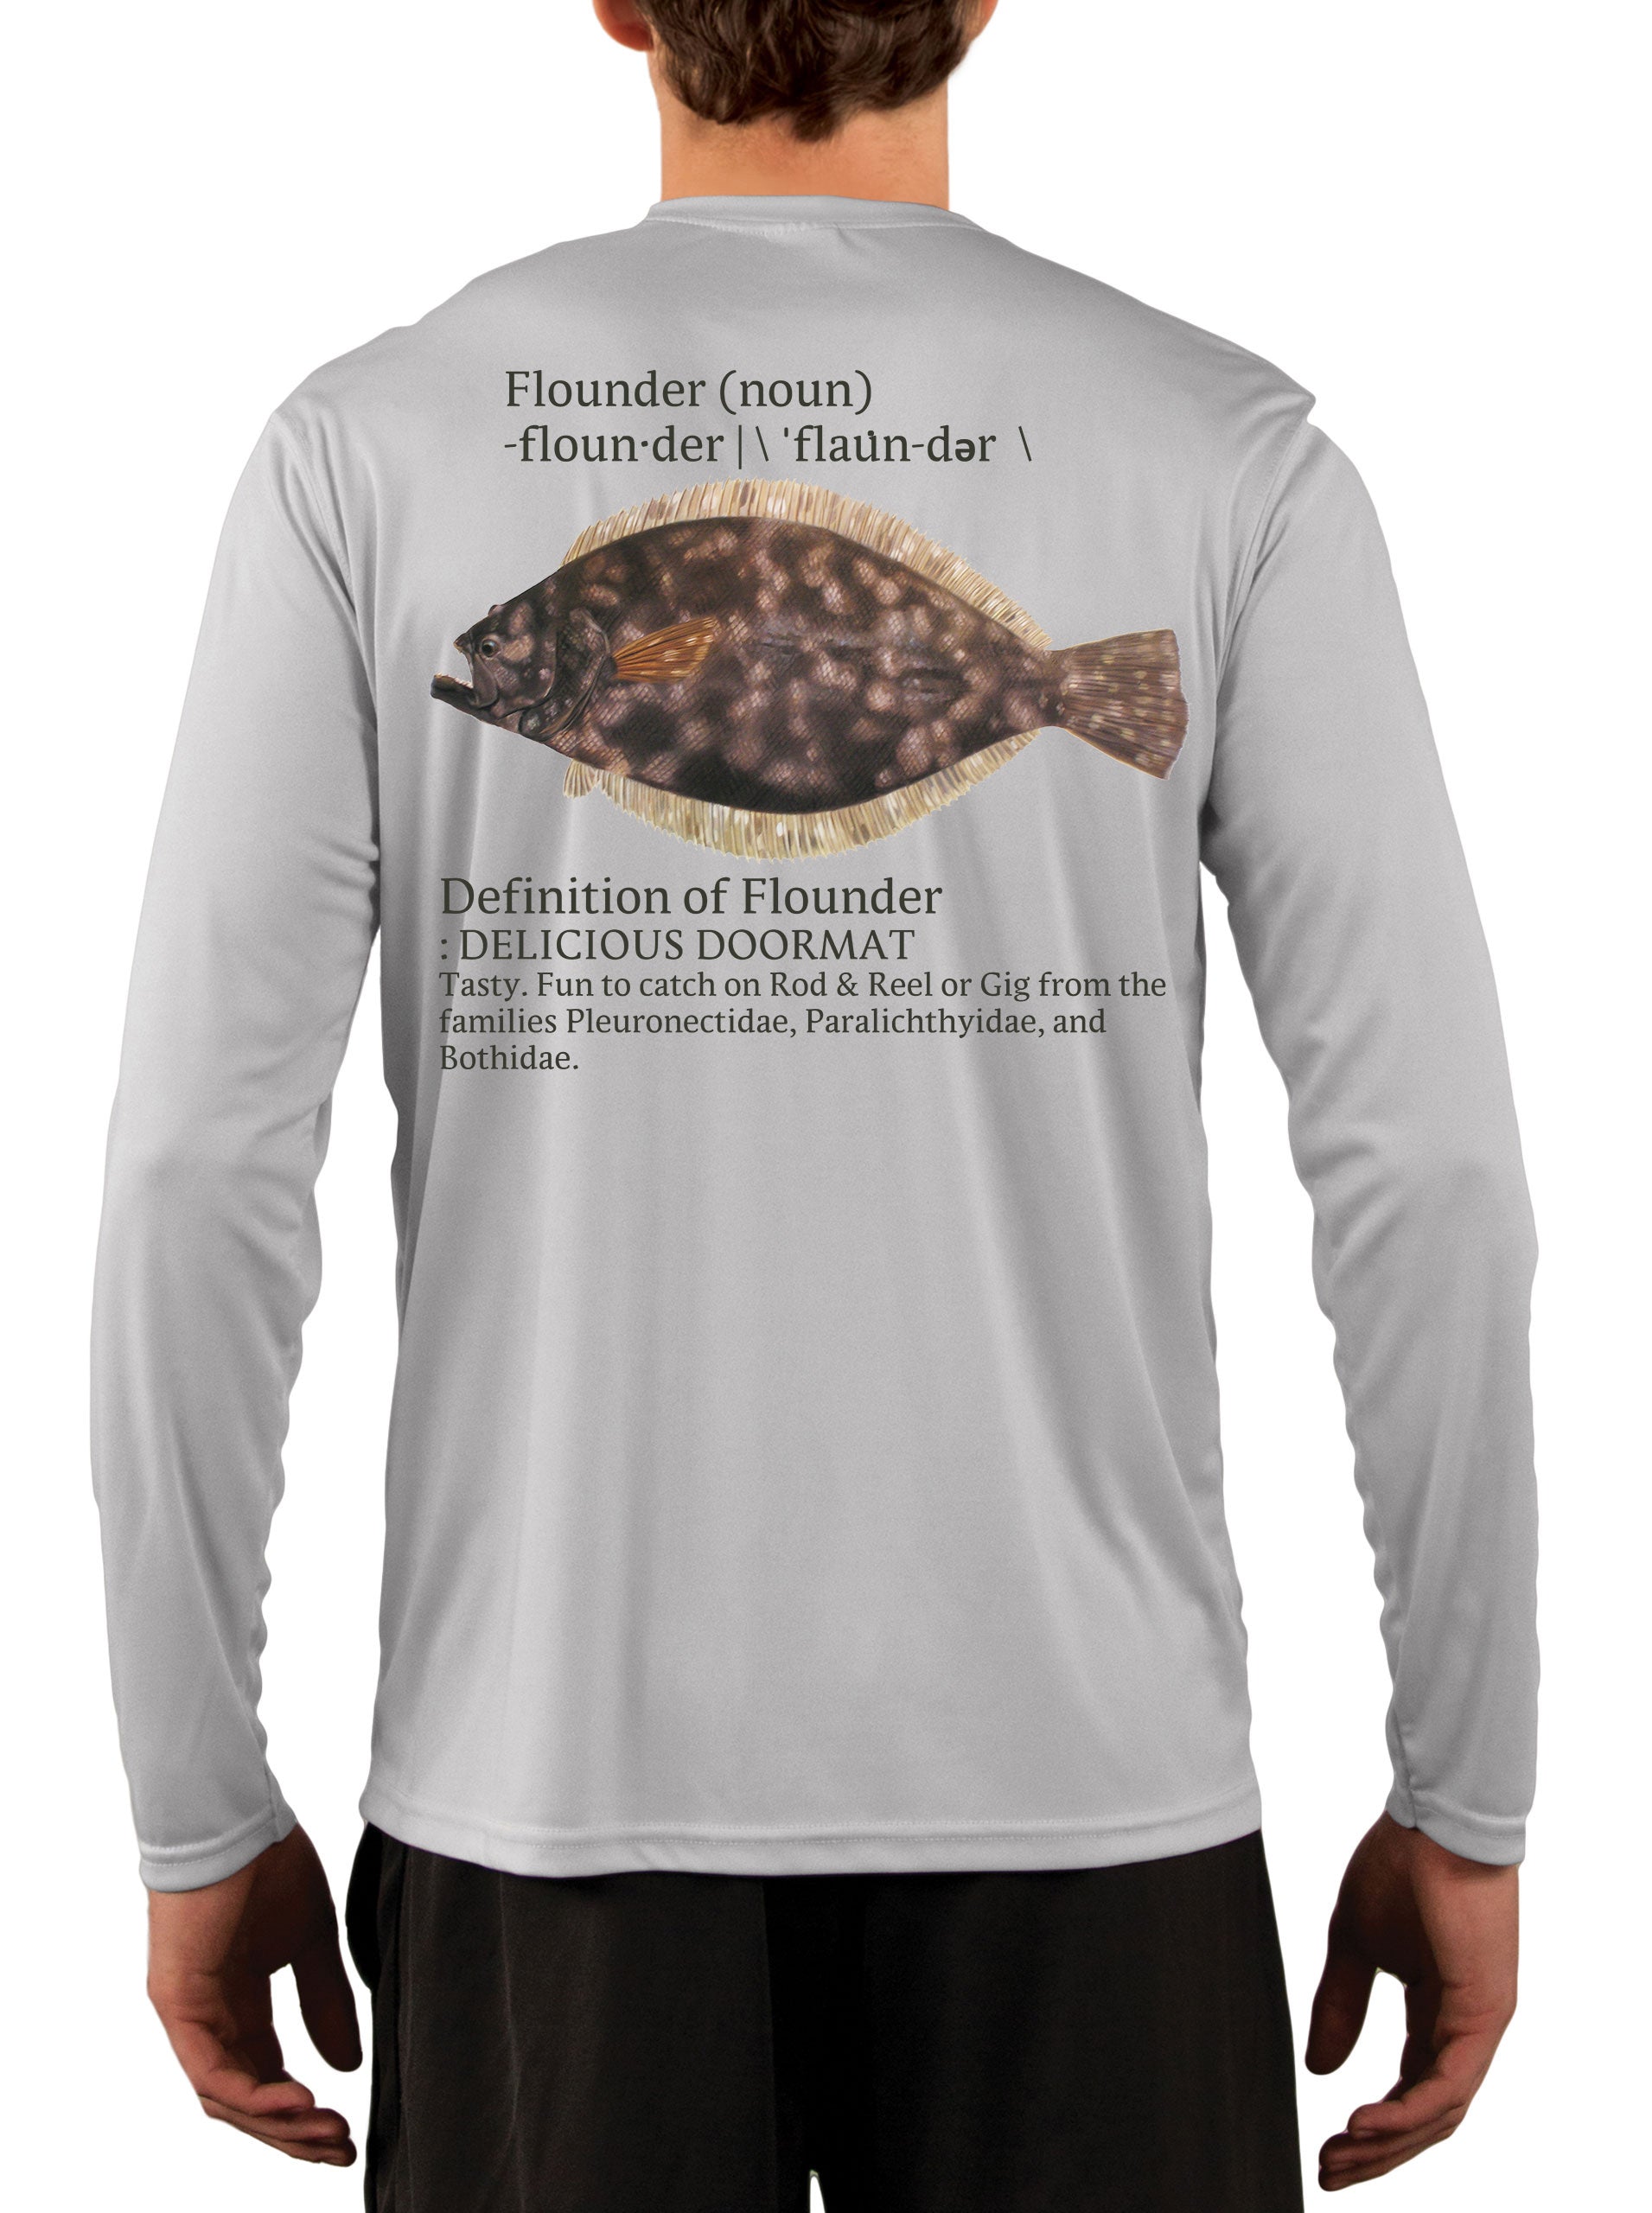 Flounder Fishing Shirts for Men Fluke - UV Protected +50 Sun Protection with Moisture Wicking Technology - Skiff Life